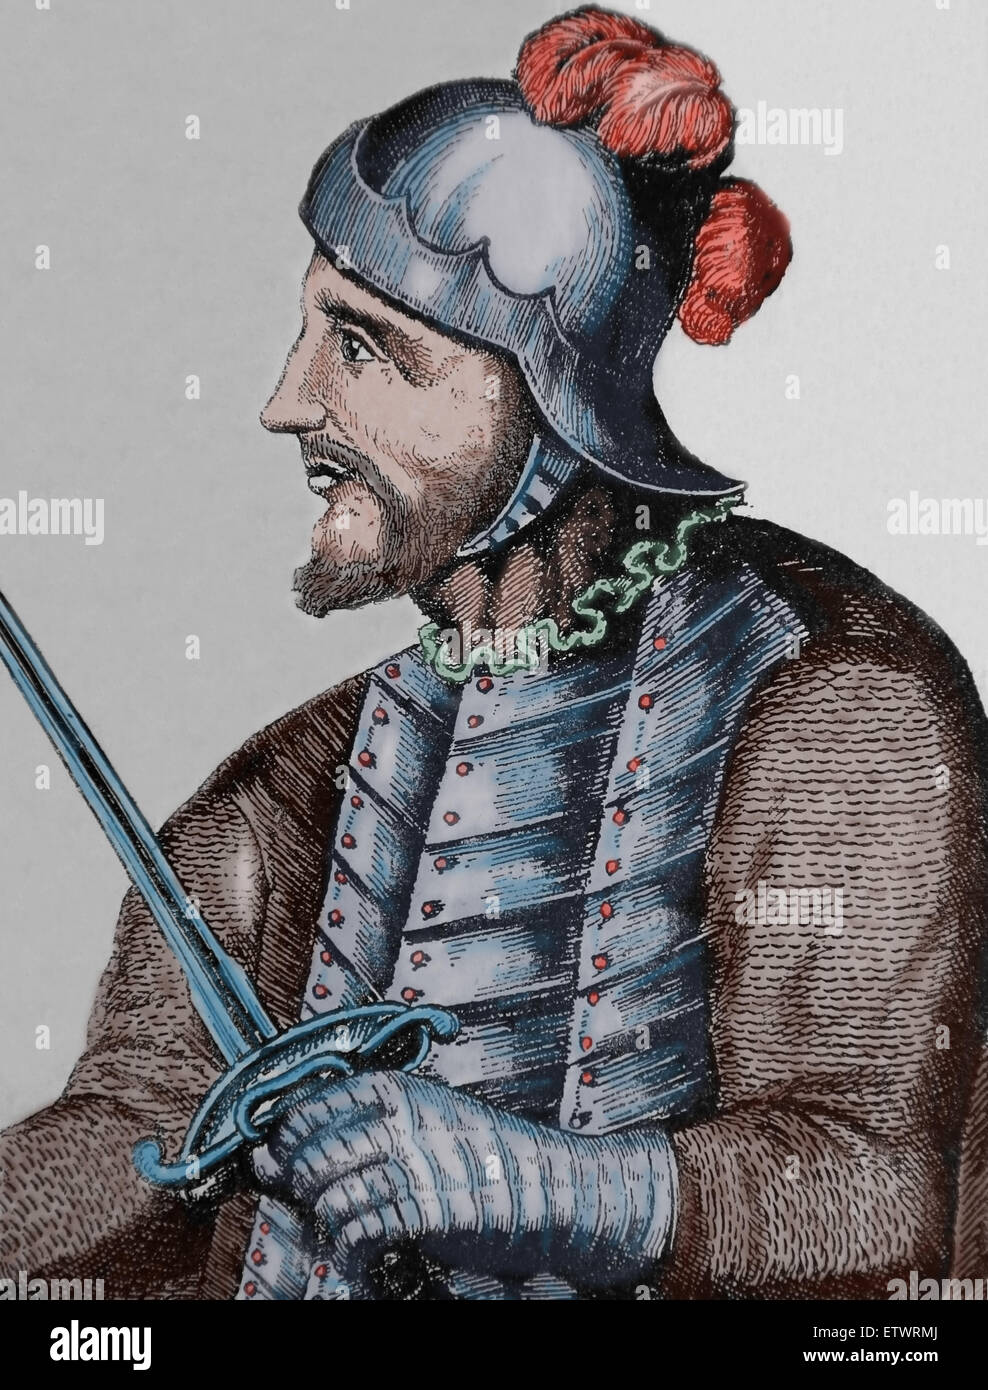 Vasco Nunez de Balboa (1475-1519). Gouverneur, spanische Entdecker und Eroberer. Neue Welt. Farbe. Porträt. Stockfoto